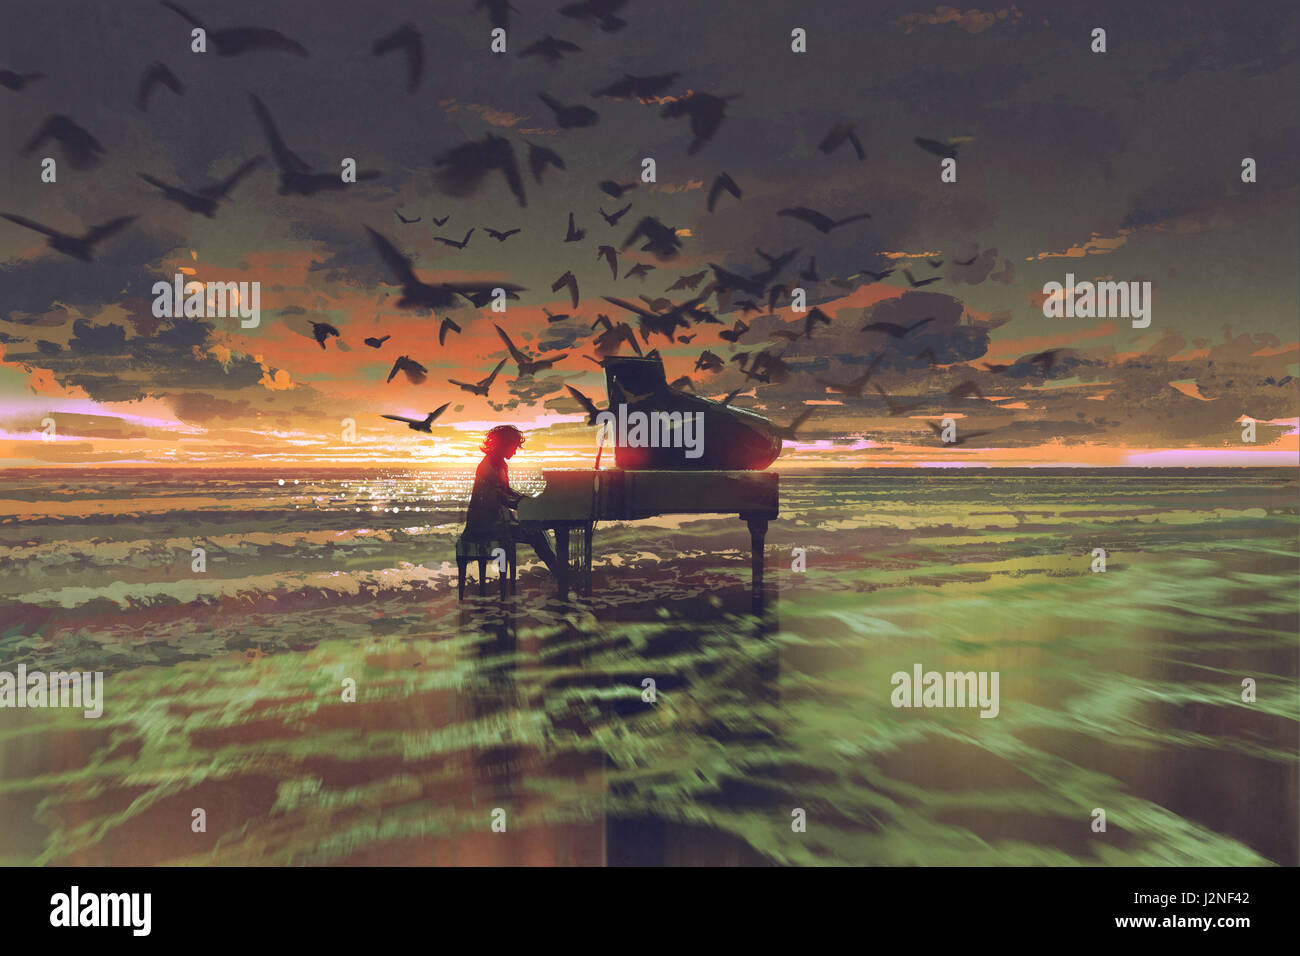 digitale Kunst des Mannes Klavierspiel unter Menge Vögel am Strand bei Sonnenuntergang, Illustration Malerei Stockfoto